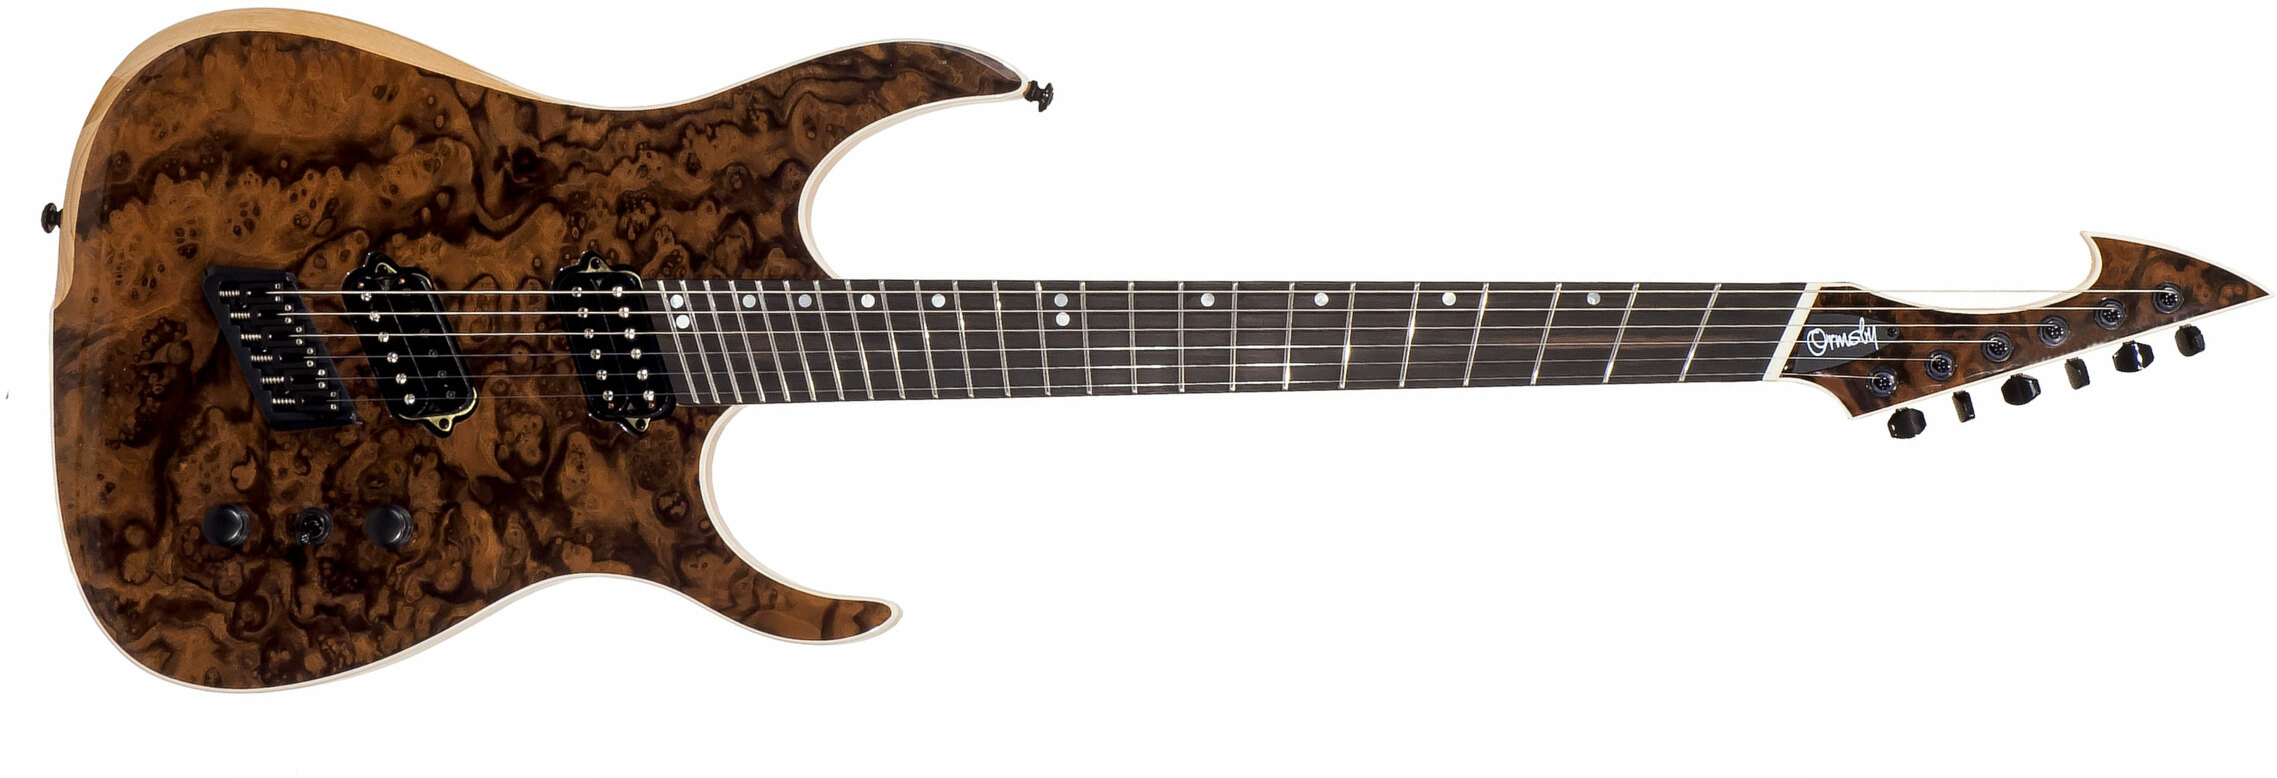 Ormsby Hype Gtr 6 Swamp Ash Walnut Burl Hh Ht Eb - Natural - Multi-scale gitaar - Main picture